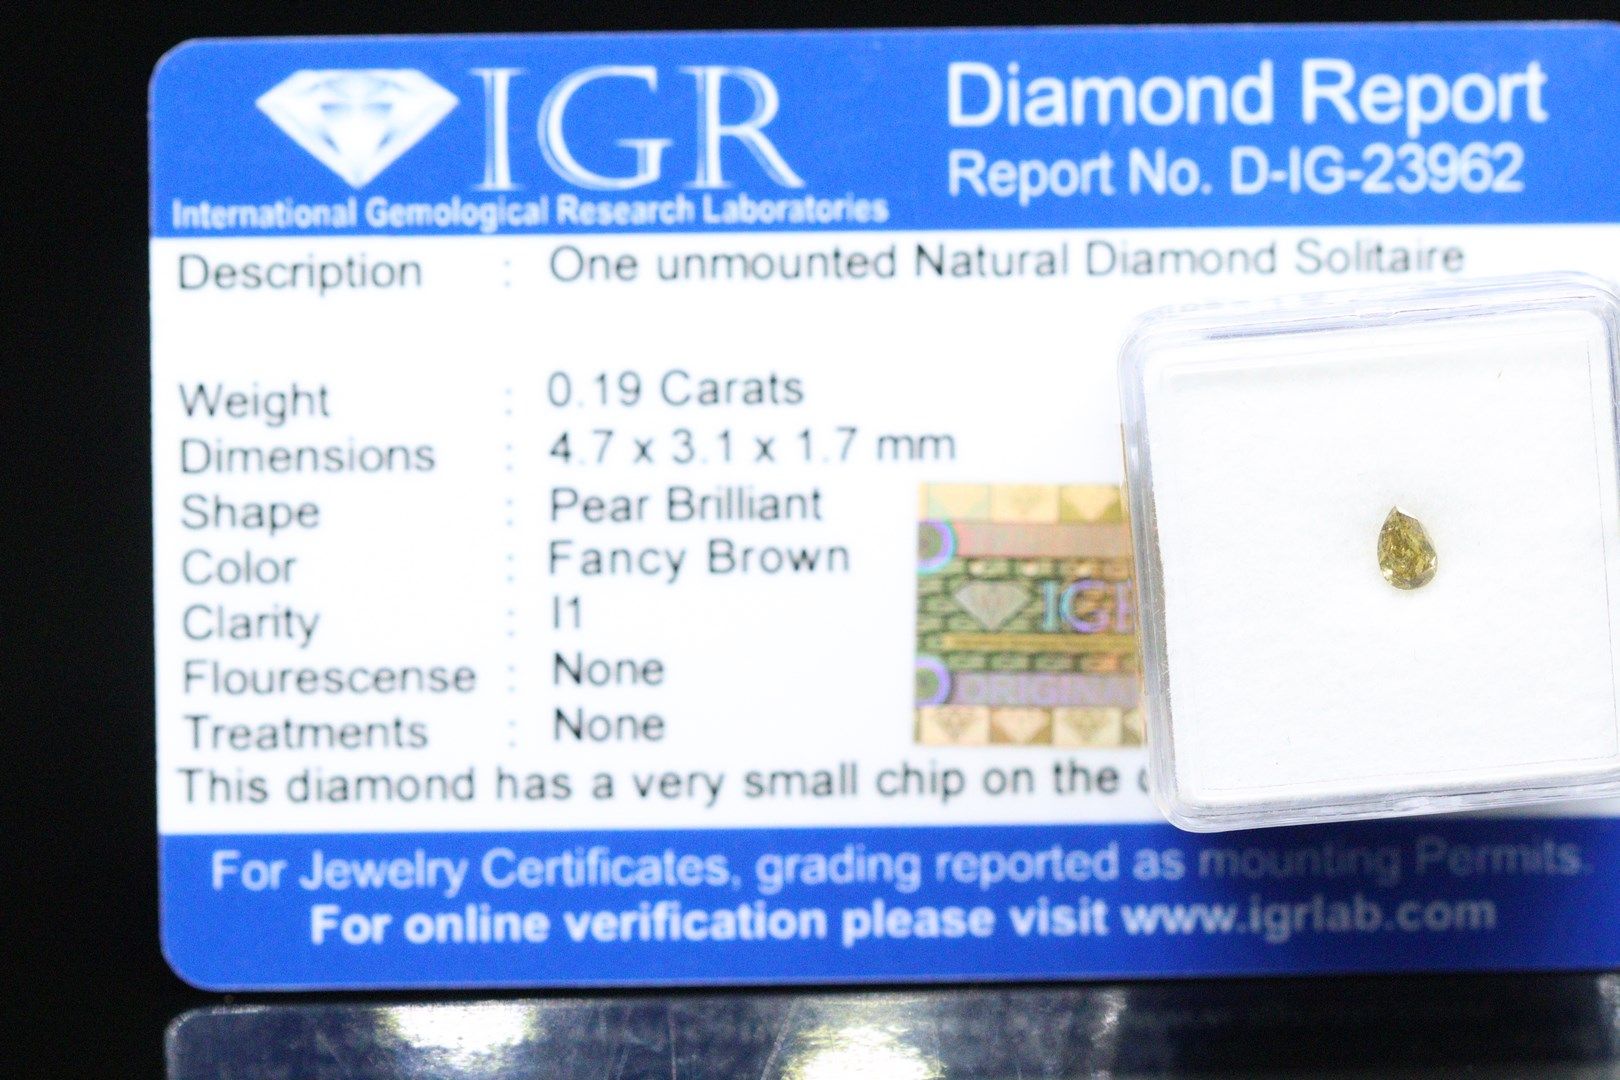 Null 印章下的圆形 "花色棕色 "钻石。

附带一份IGR的报告，证明......。

颜色：花哨的棕色

清晰度: I1

荧光：无

没有治疗。

重量&hellip;